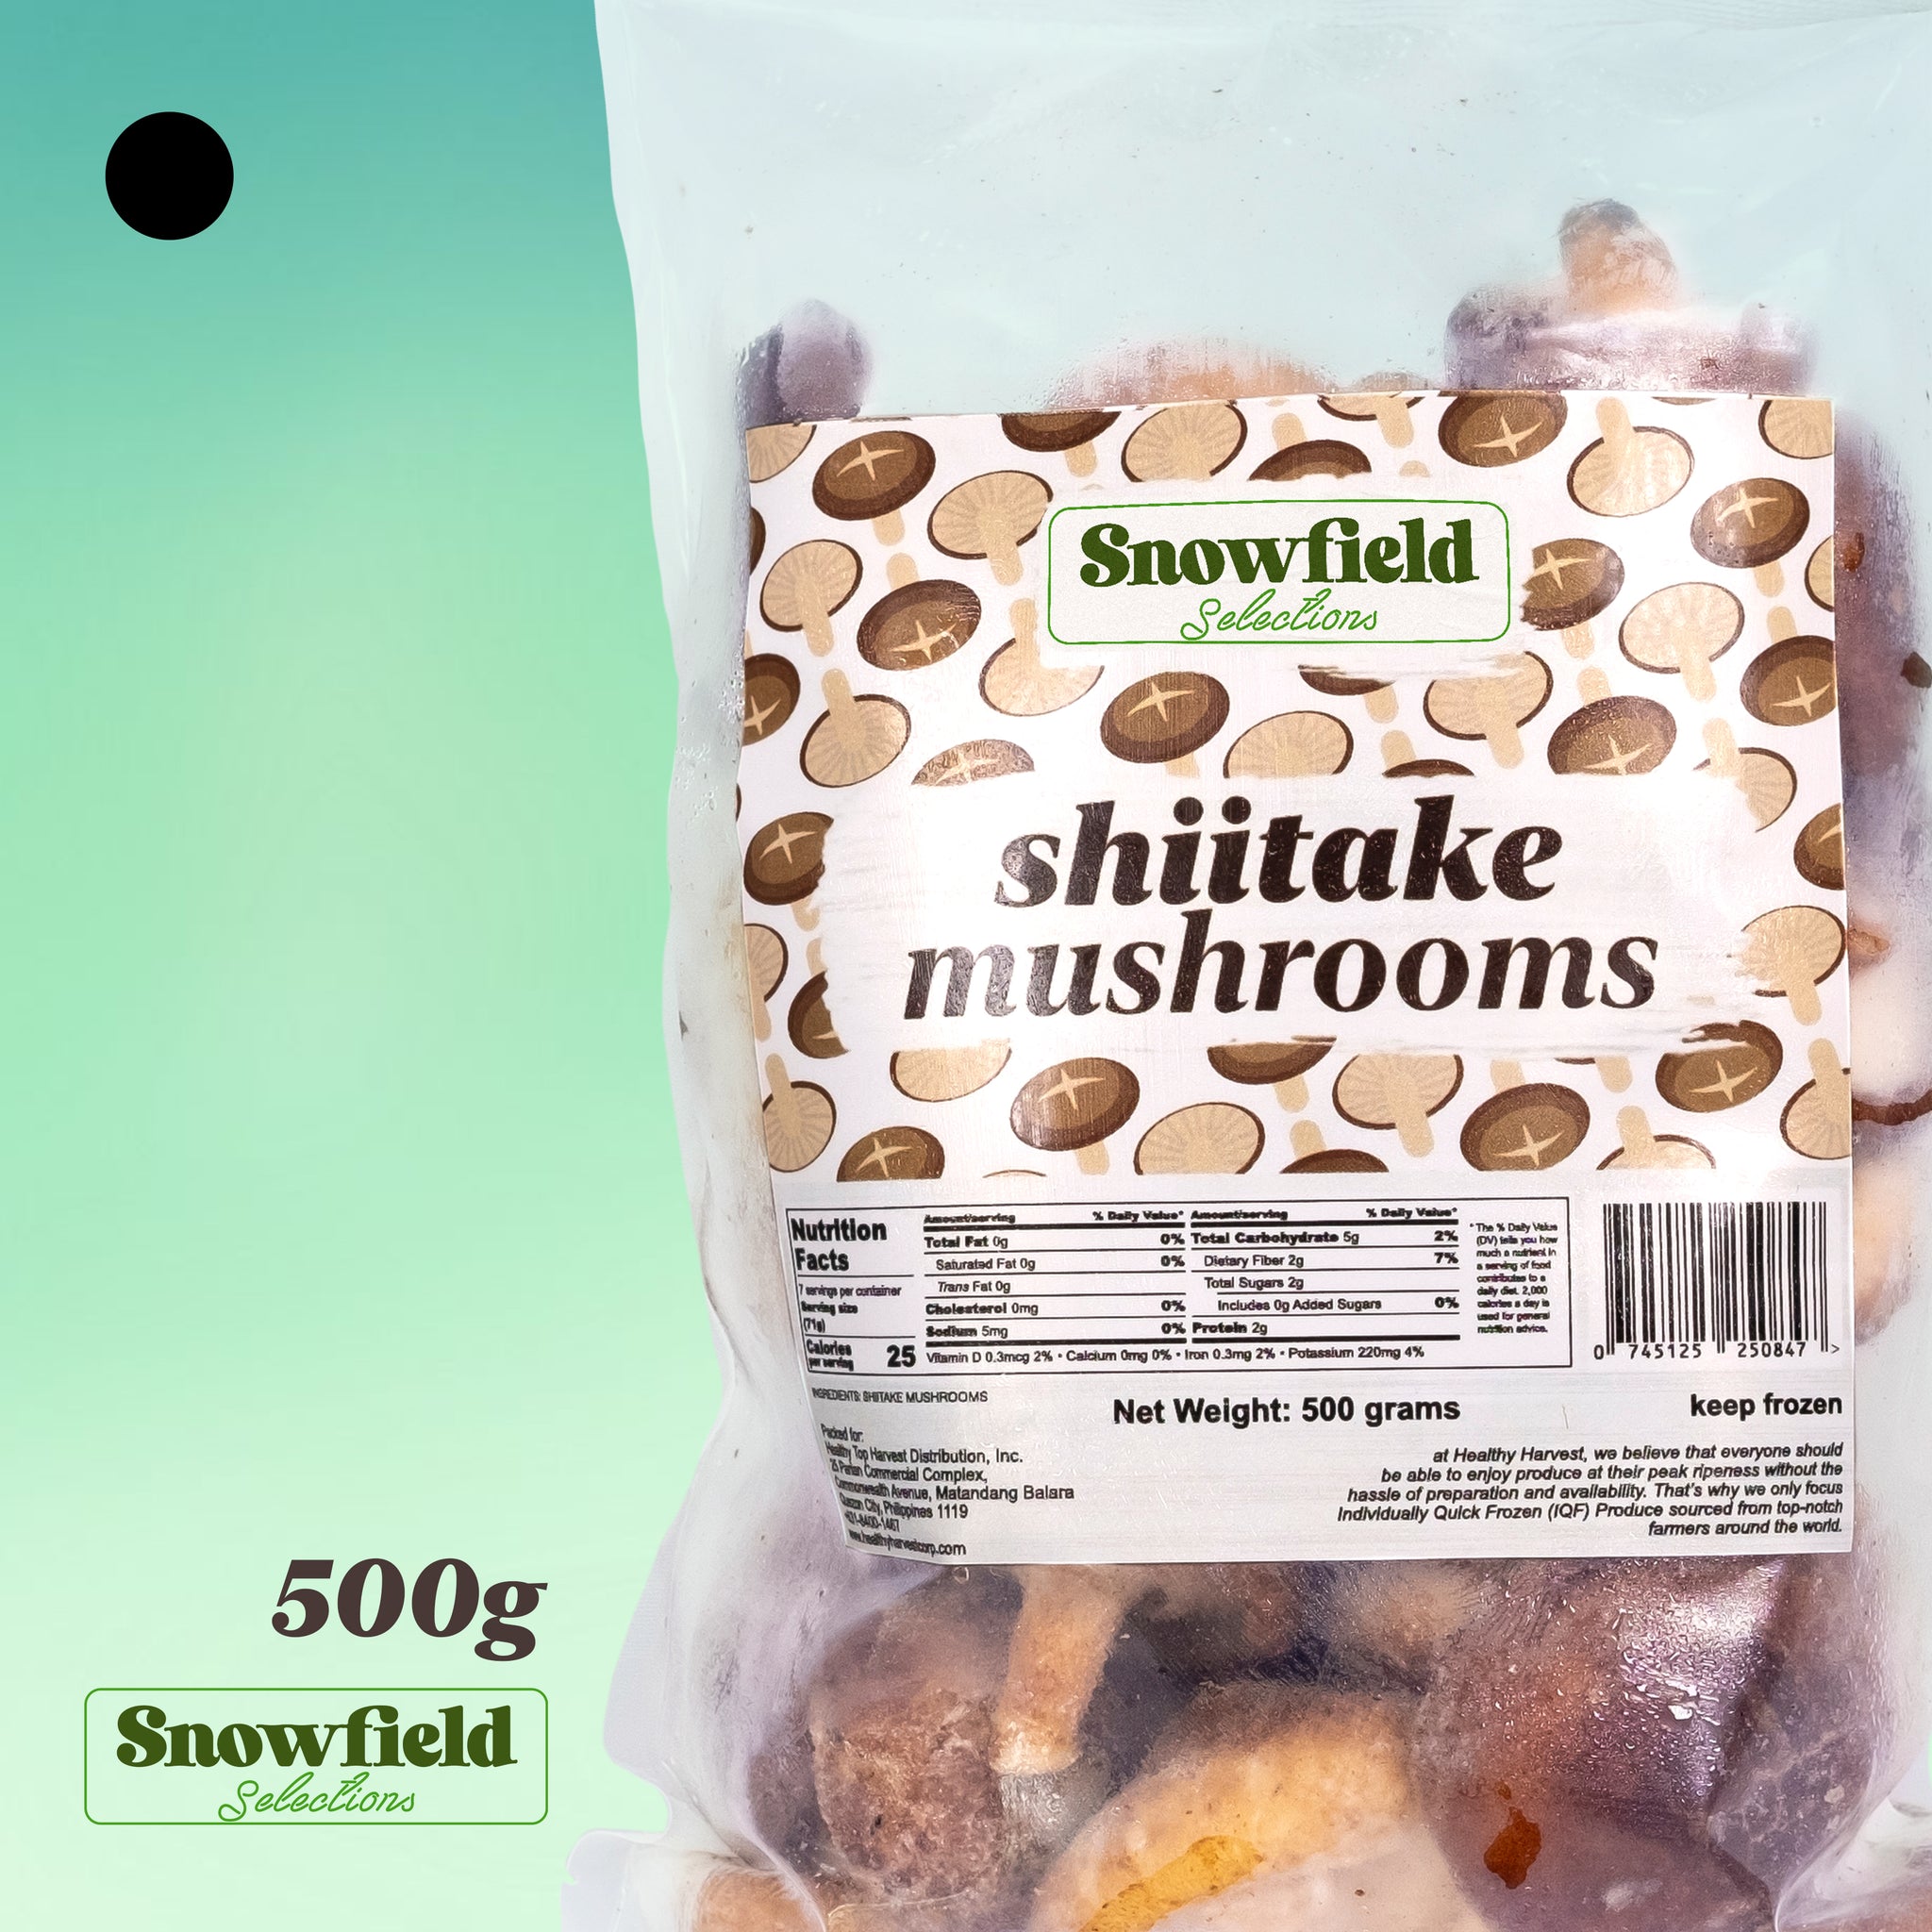 Frozen Shiitake Mushroom by Snowfield Selections - Premium Grade